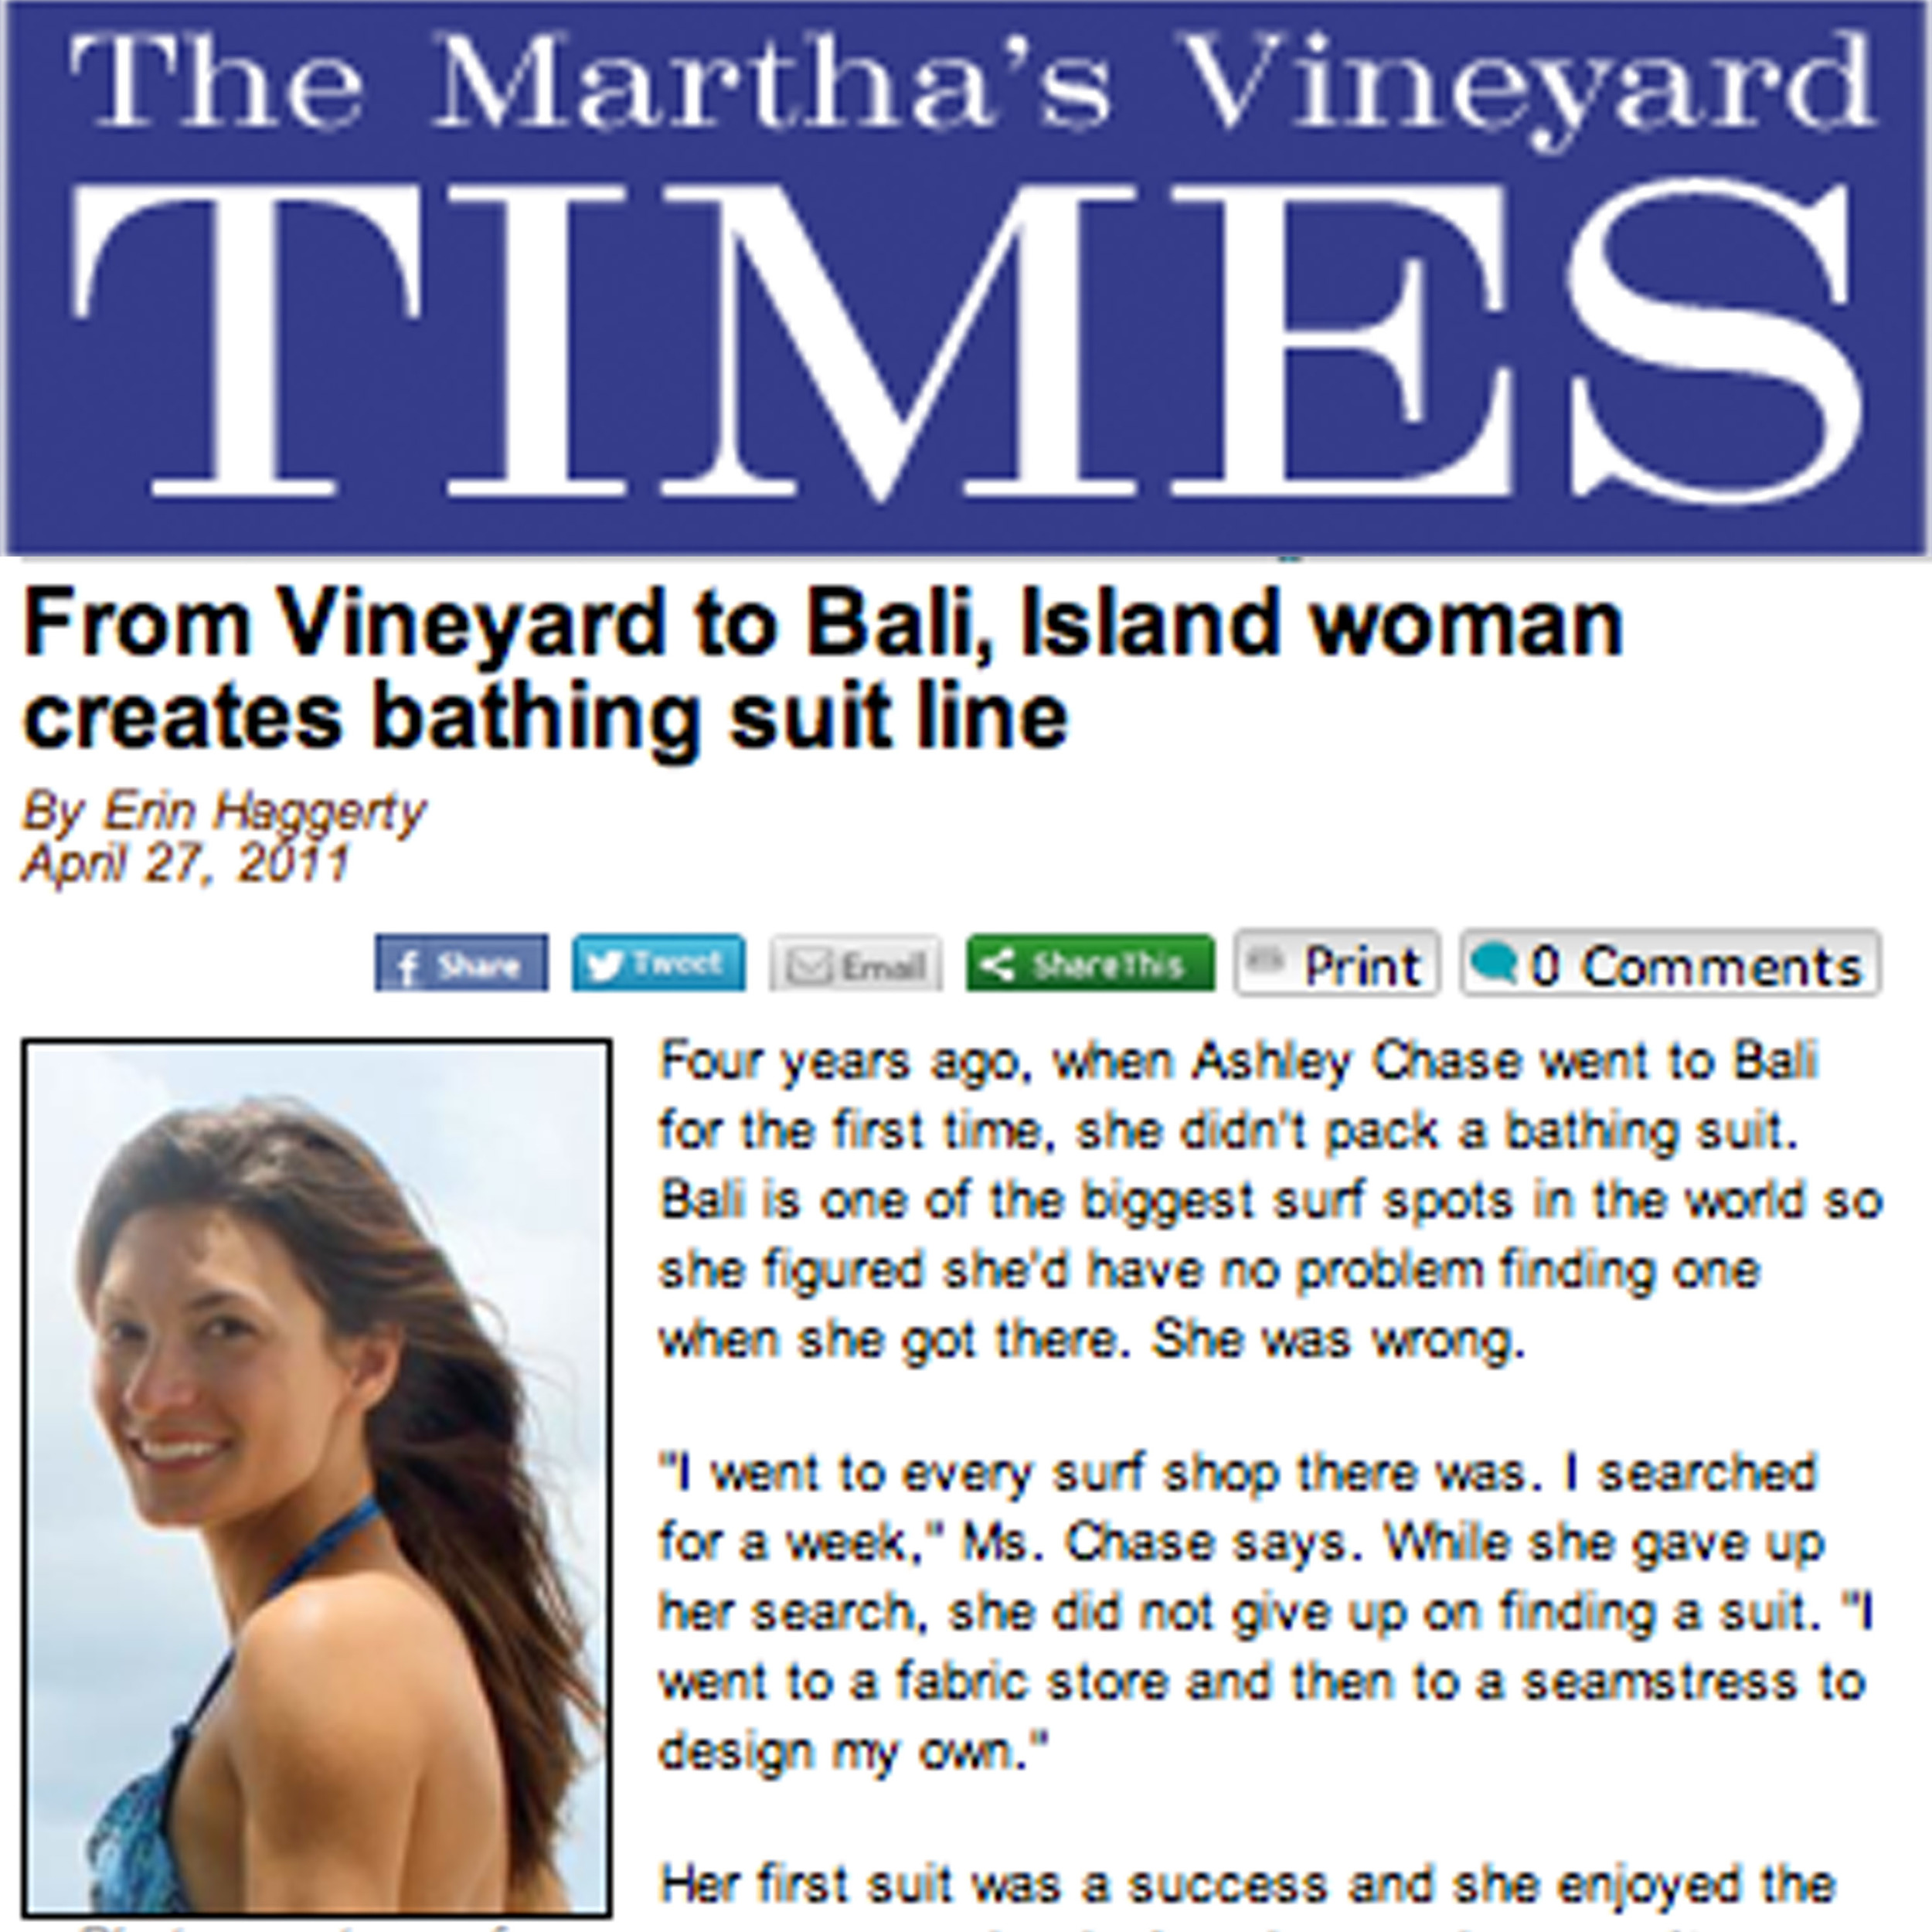 The Marthas Vineyard Times, Bali based swimwear line